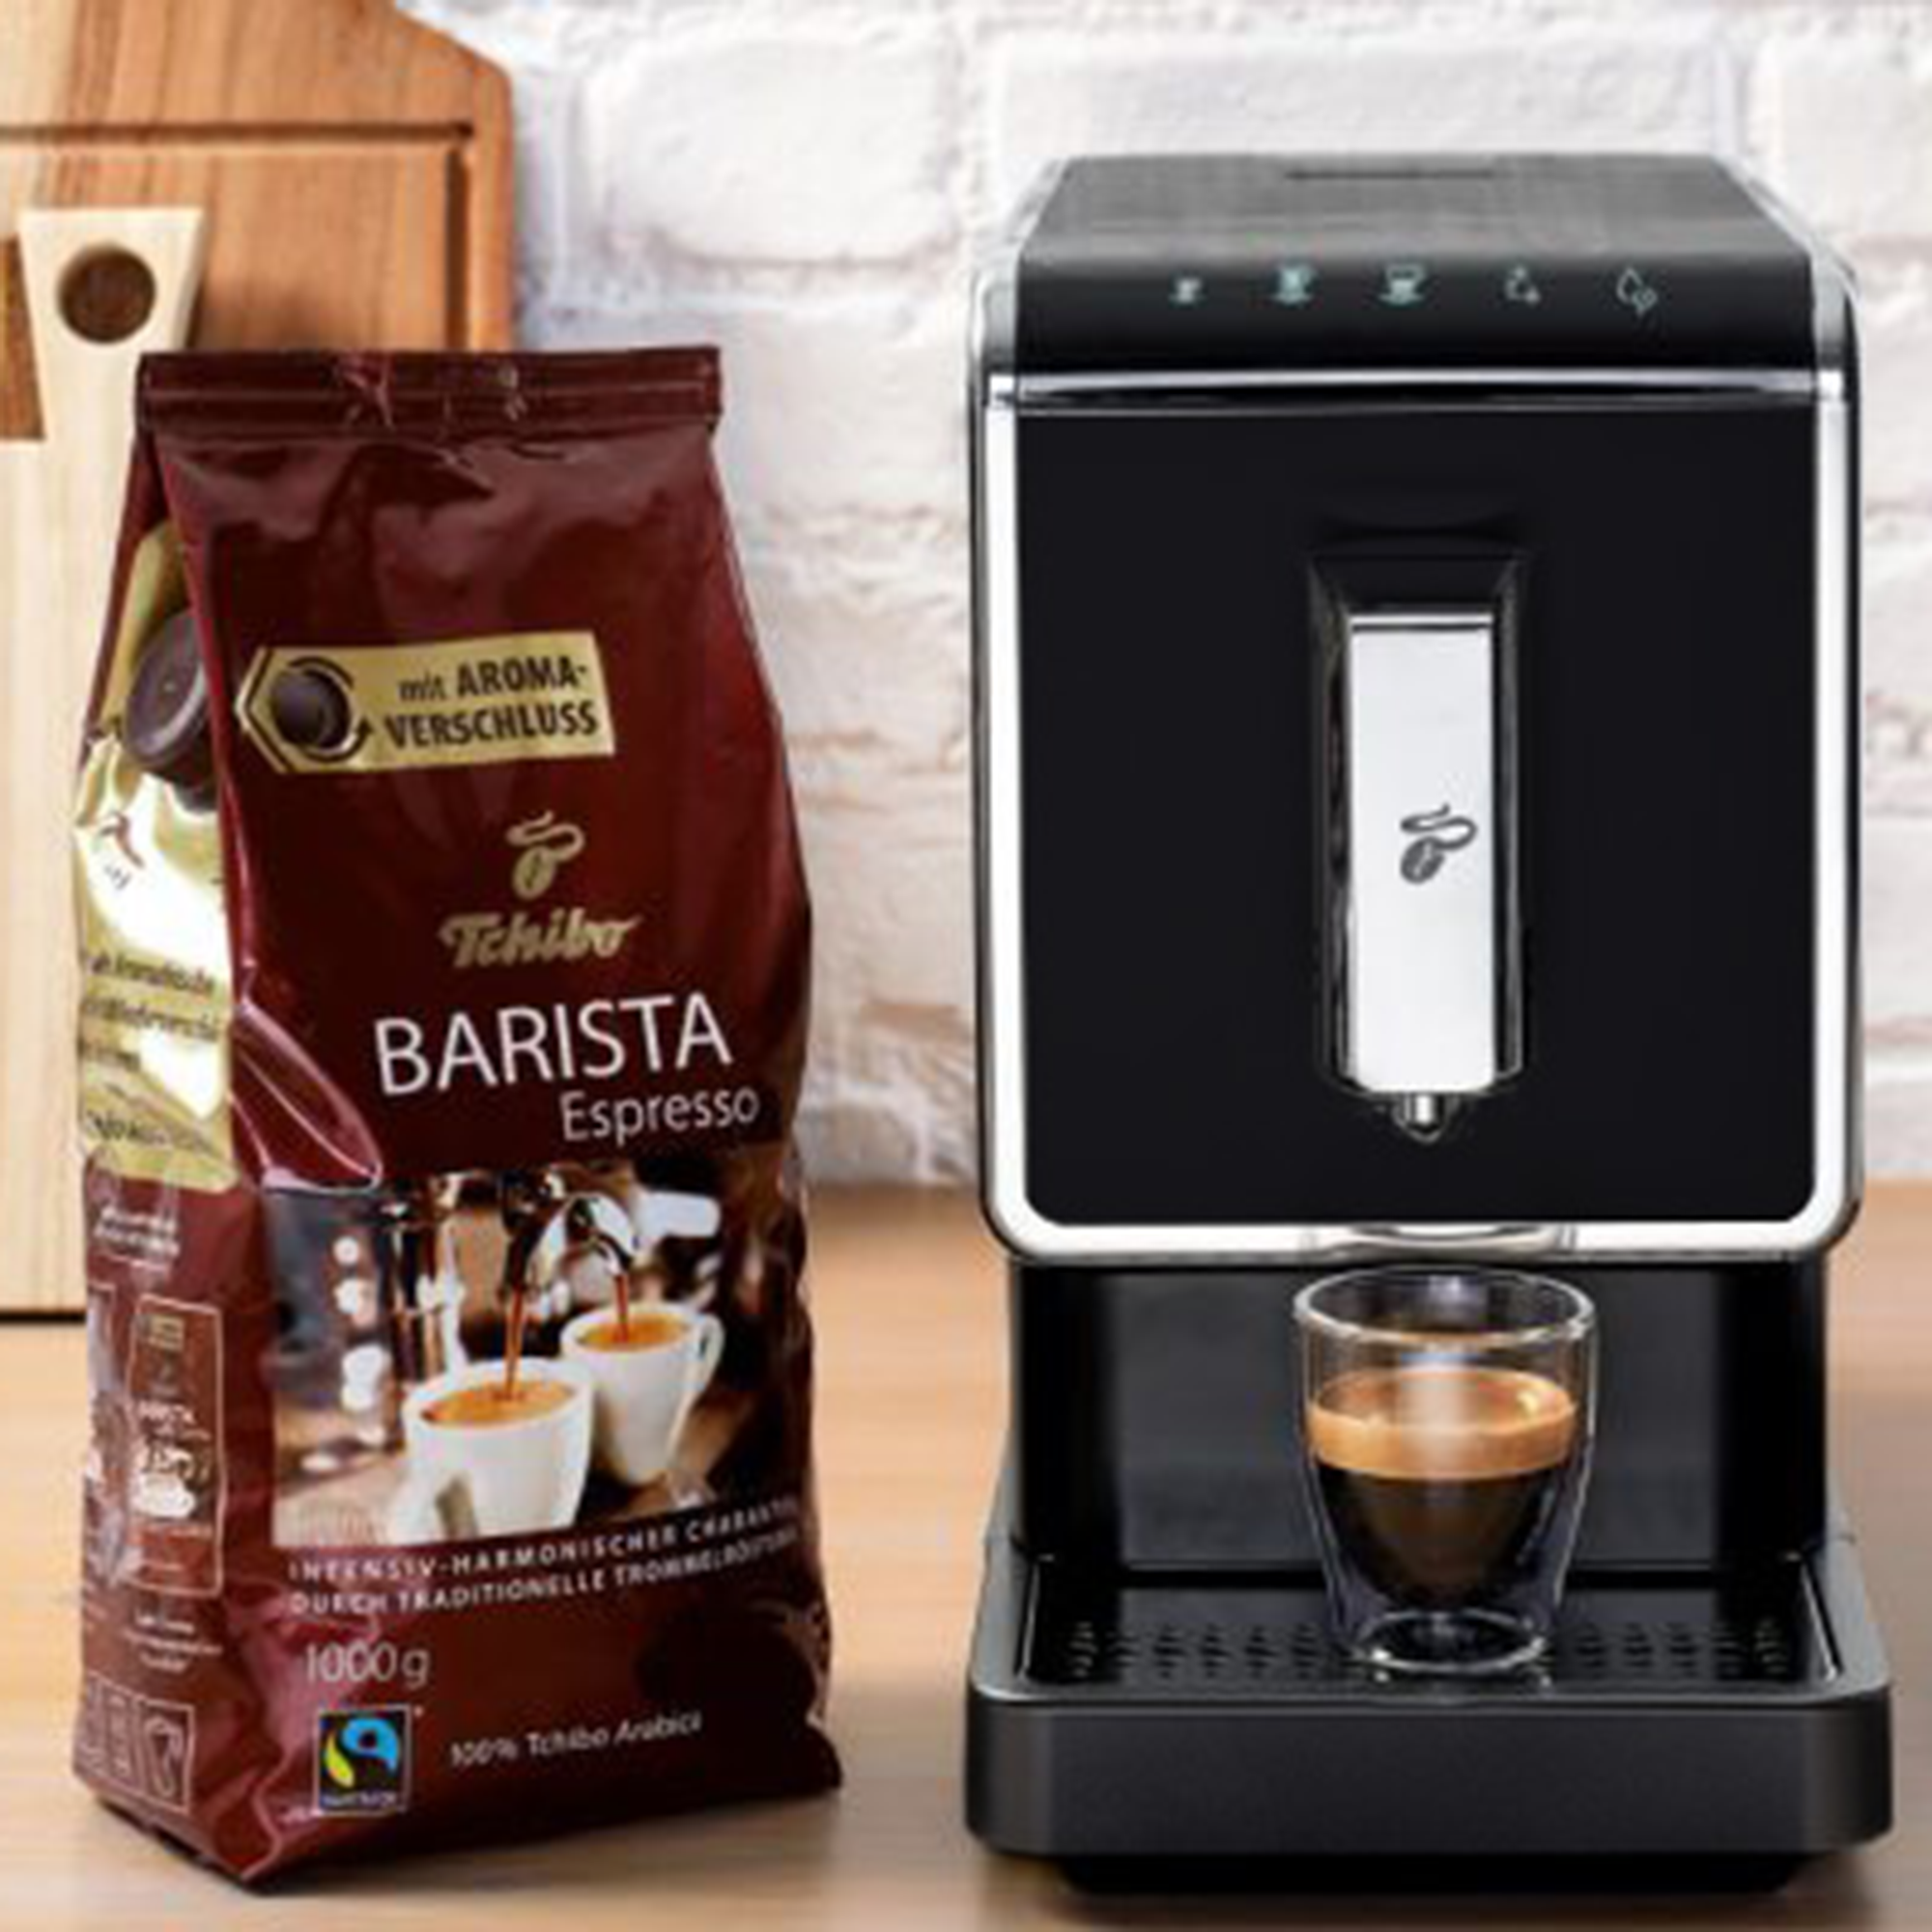 Barista Espresso 35.2 oz